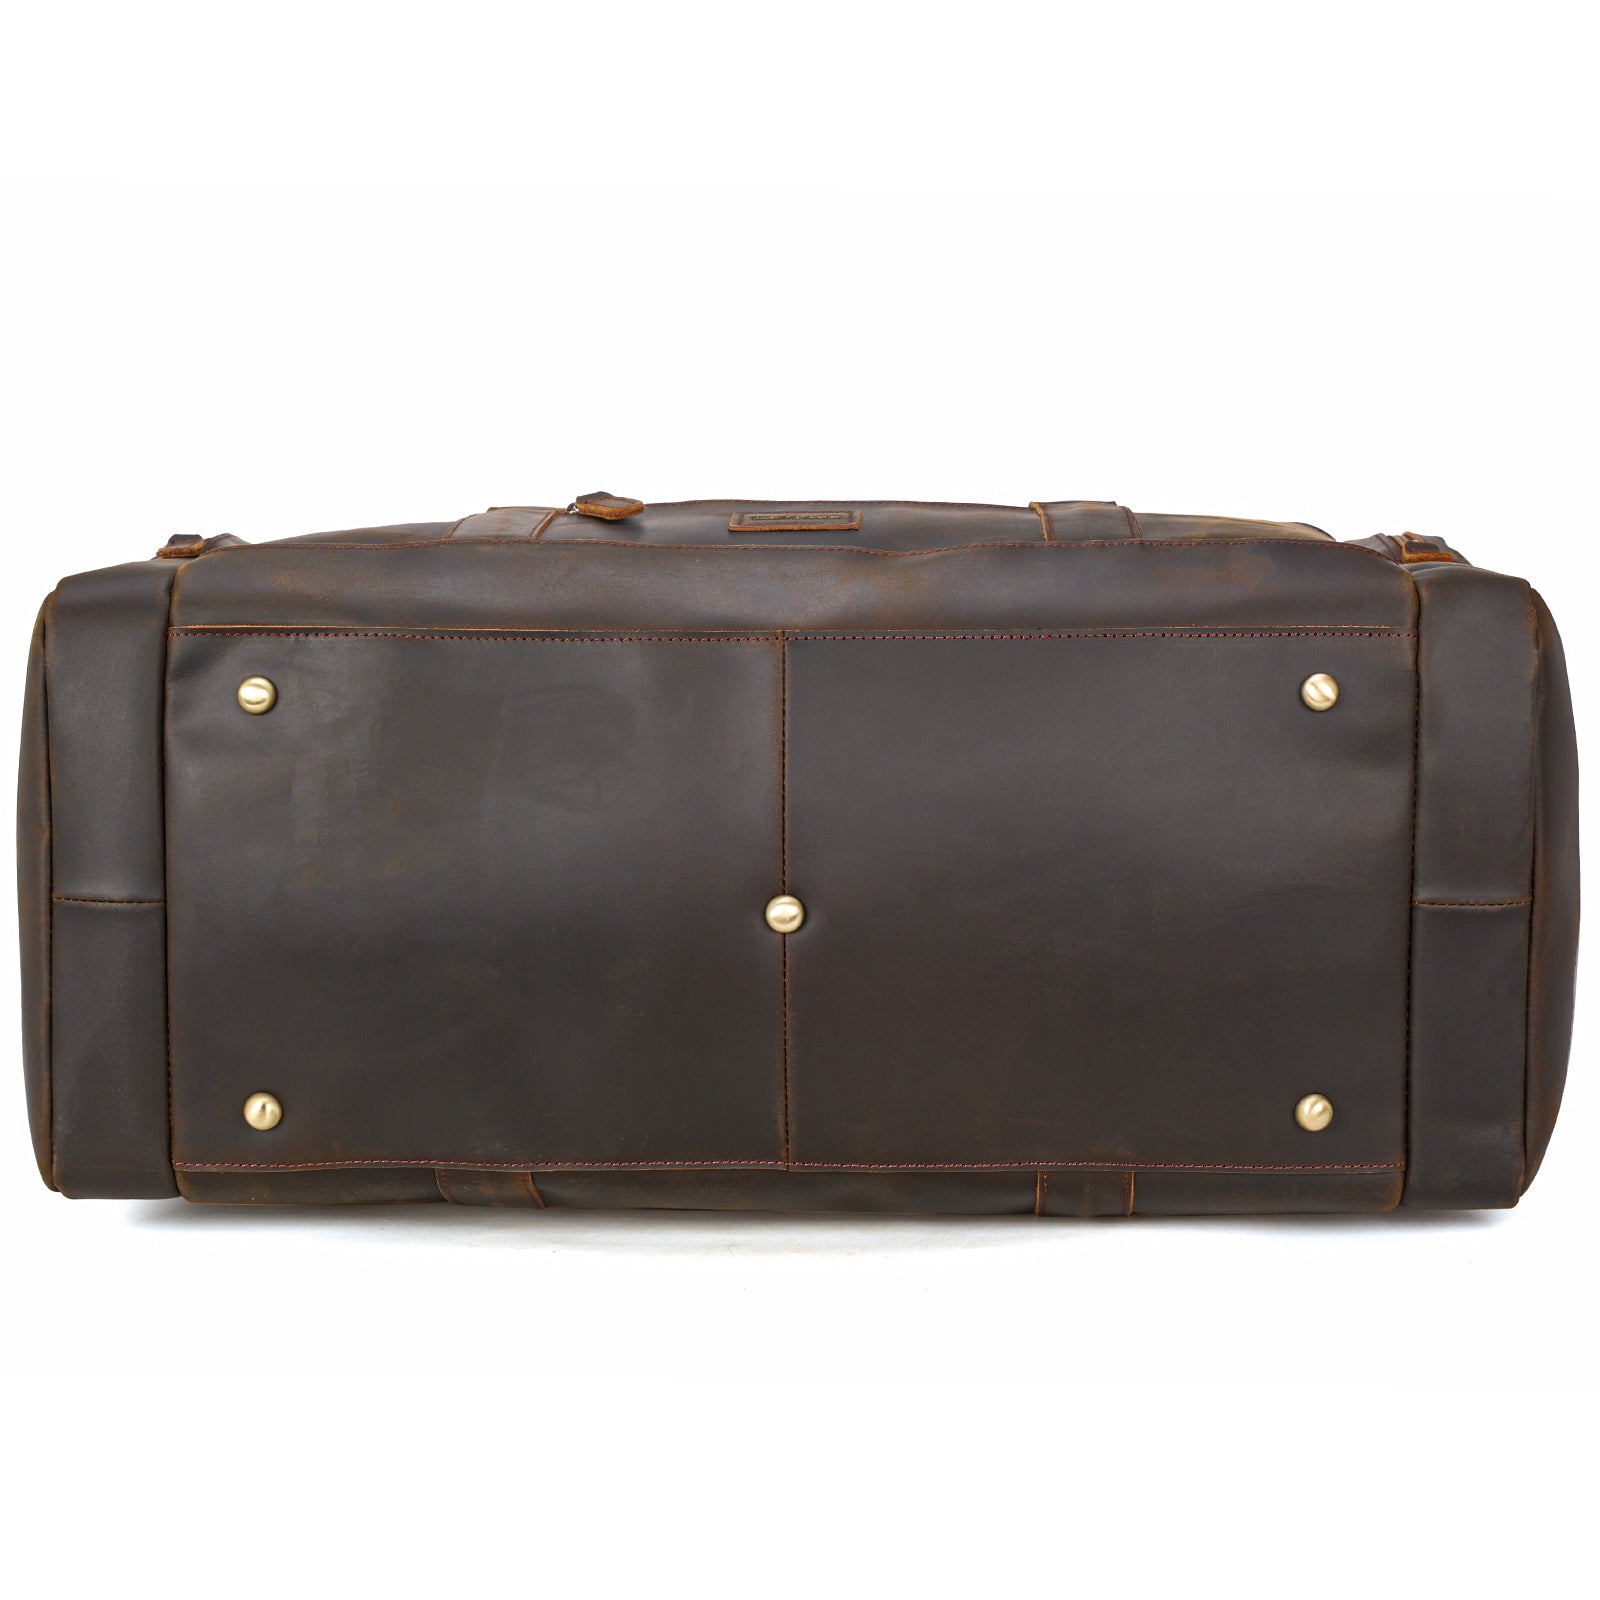 Full Grain Leather Travel Duffle Bag 42L Sport Weekender Bag